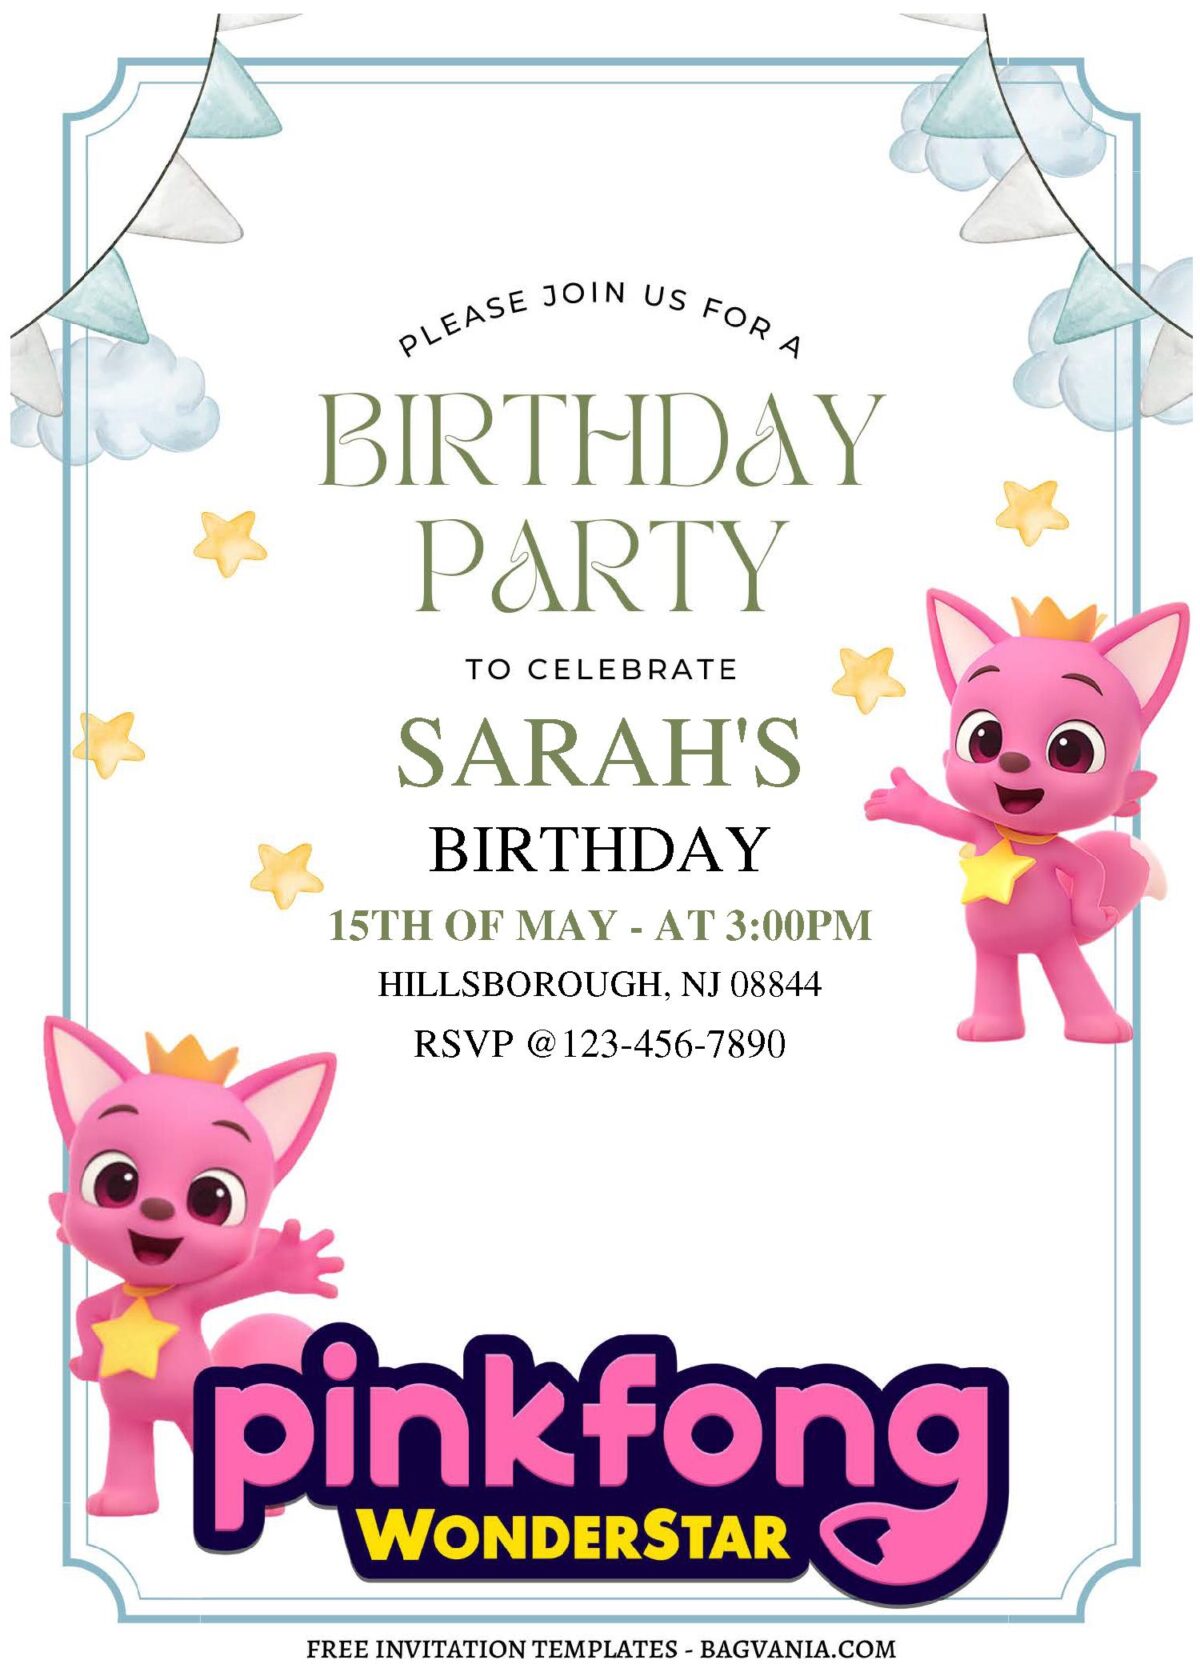 (Free Editable PDF) Adorable Pinkfong Wonderstar Kids Birthday Invitation Templates with cute stars